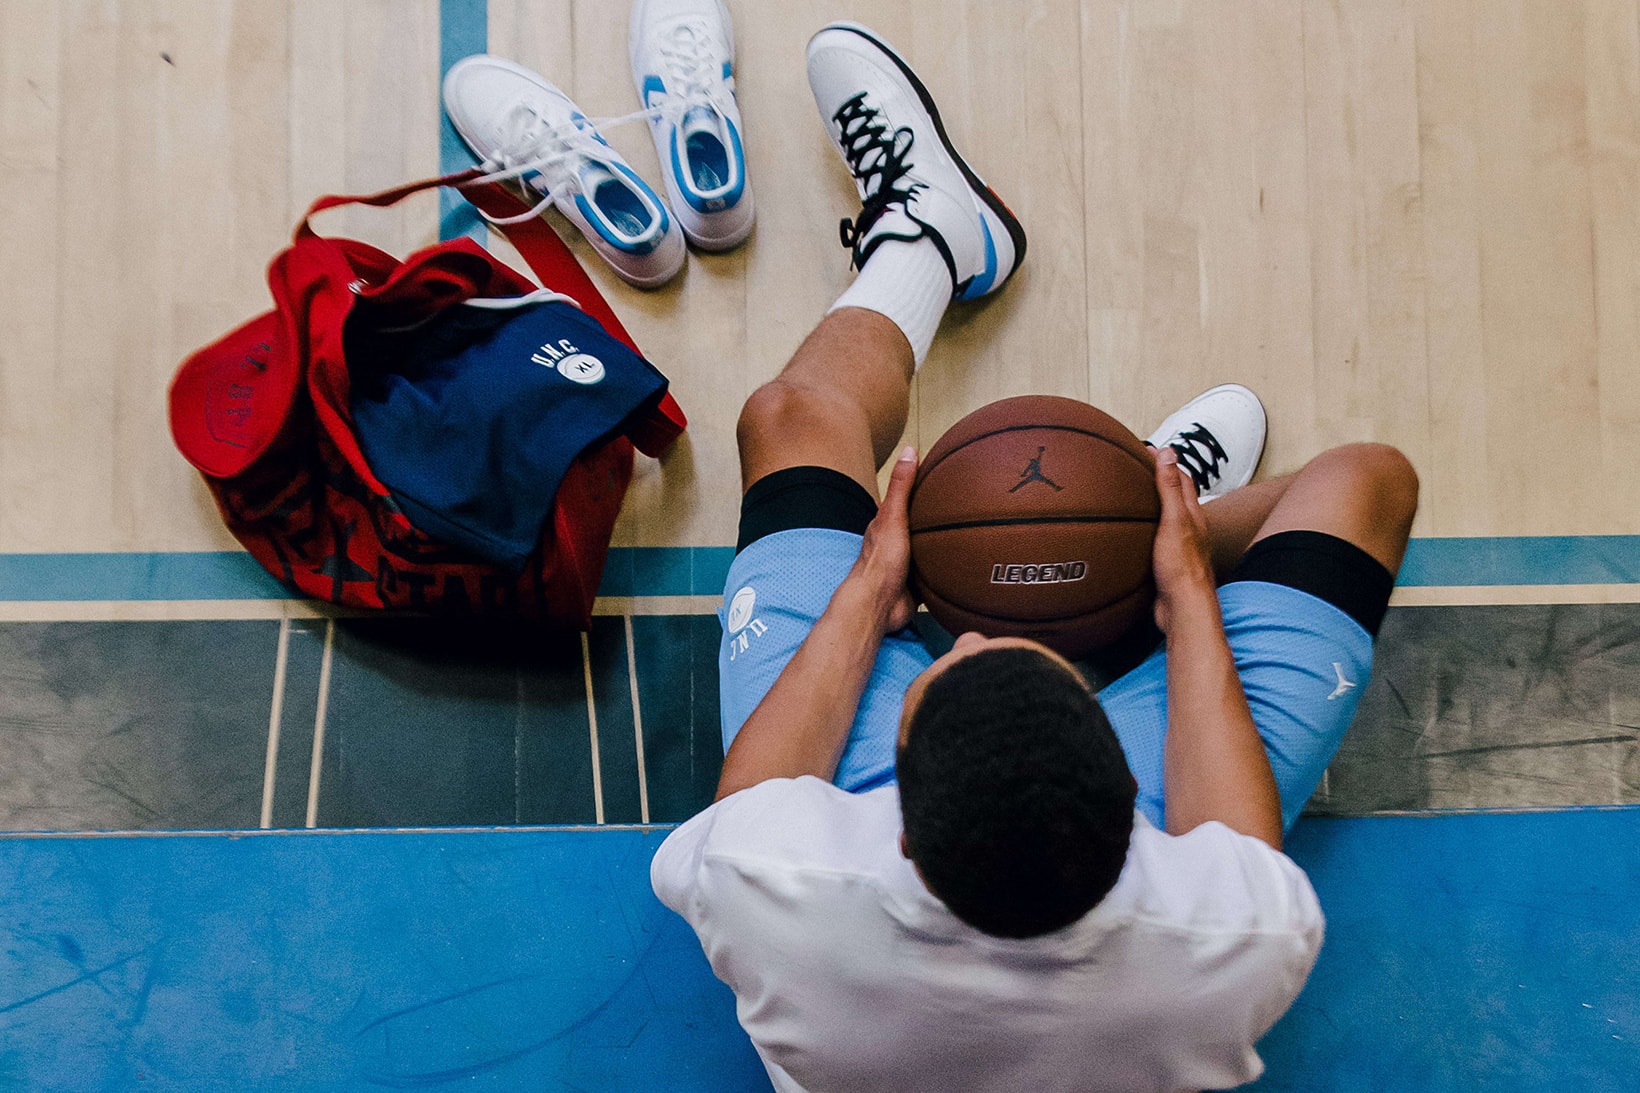 Men's Nike Carolina Blue North Carolina Tar Heels On Court Basketball Shorts